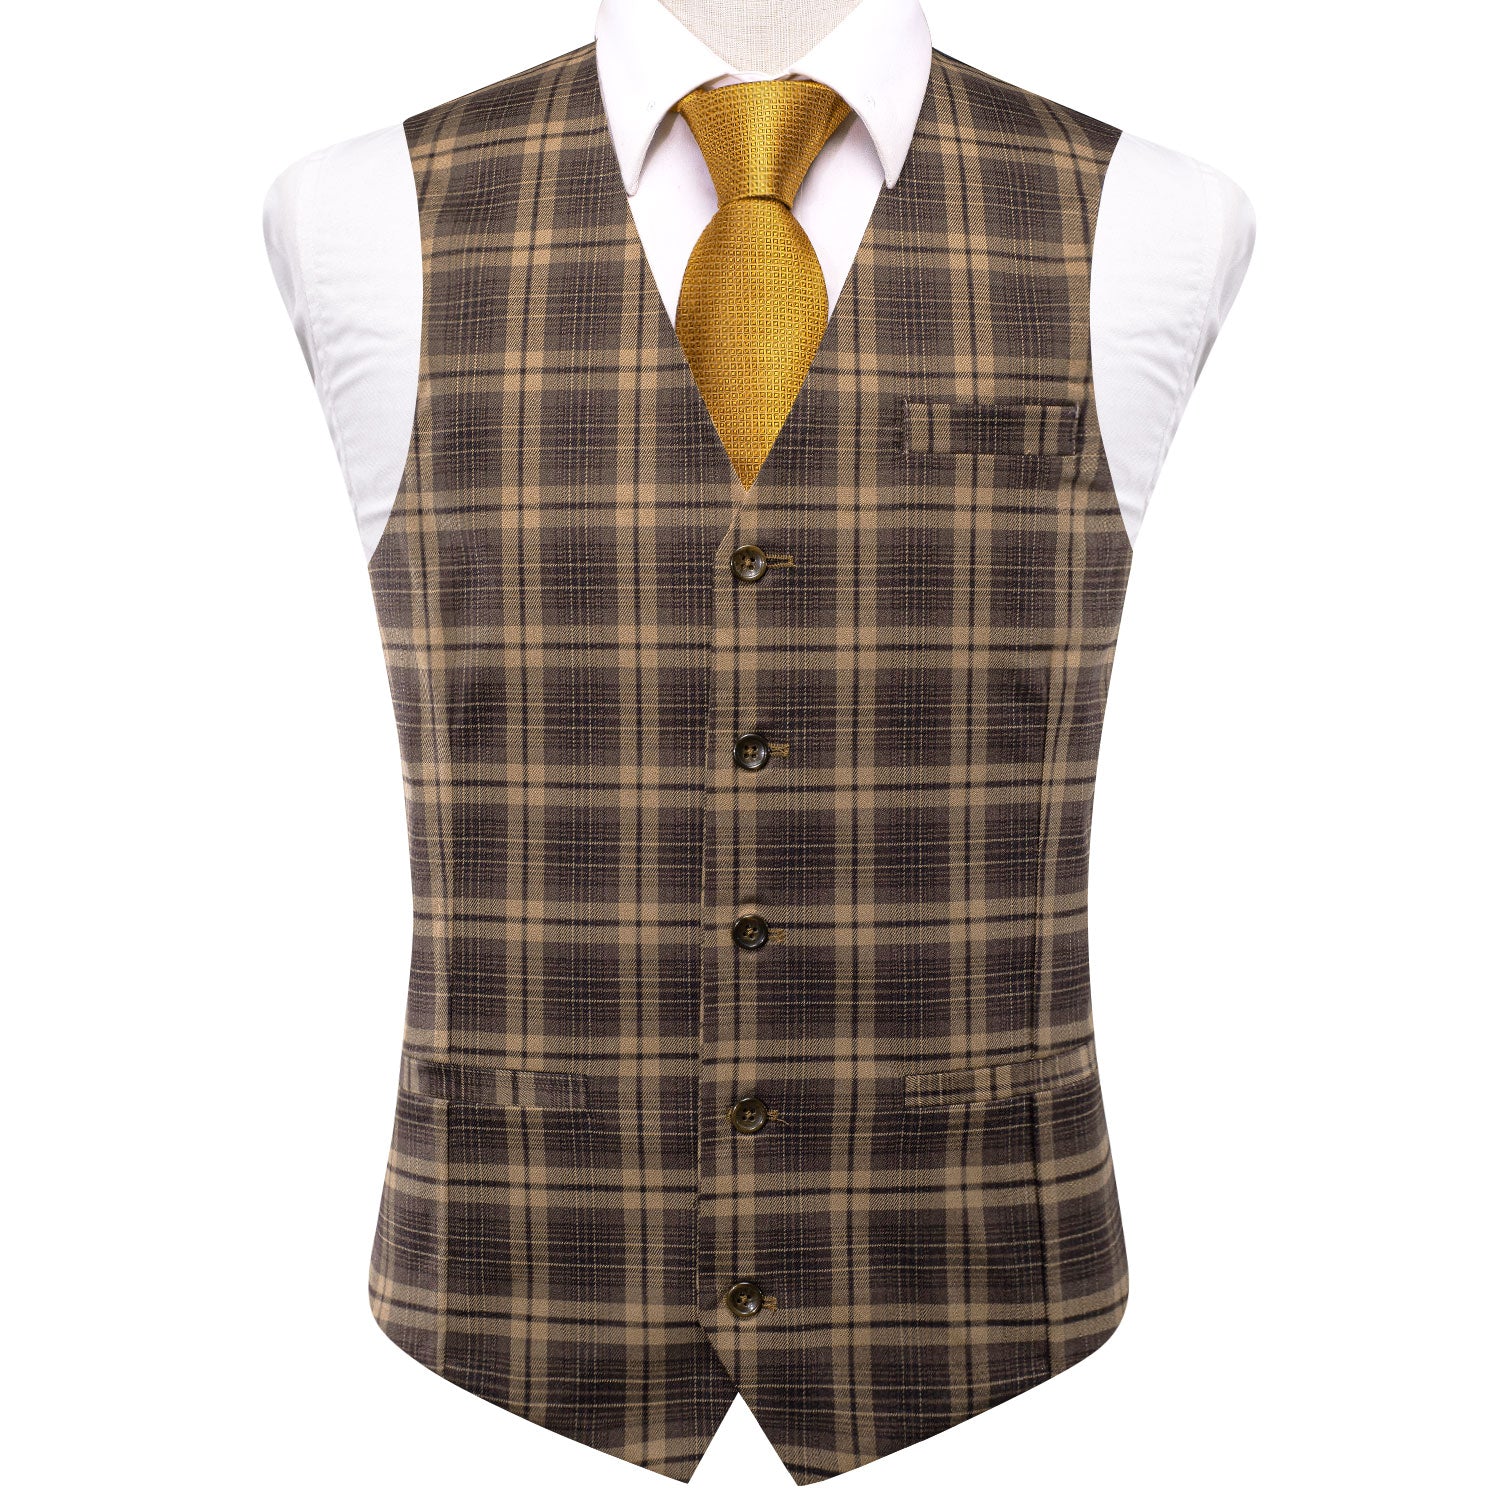 New Brown Yellow Plaid Silk England Style Men's Single Vest Waistcoat